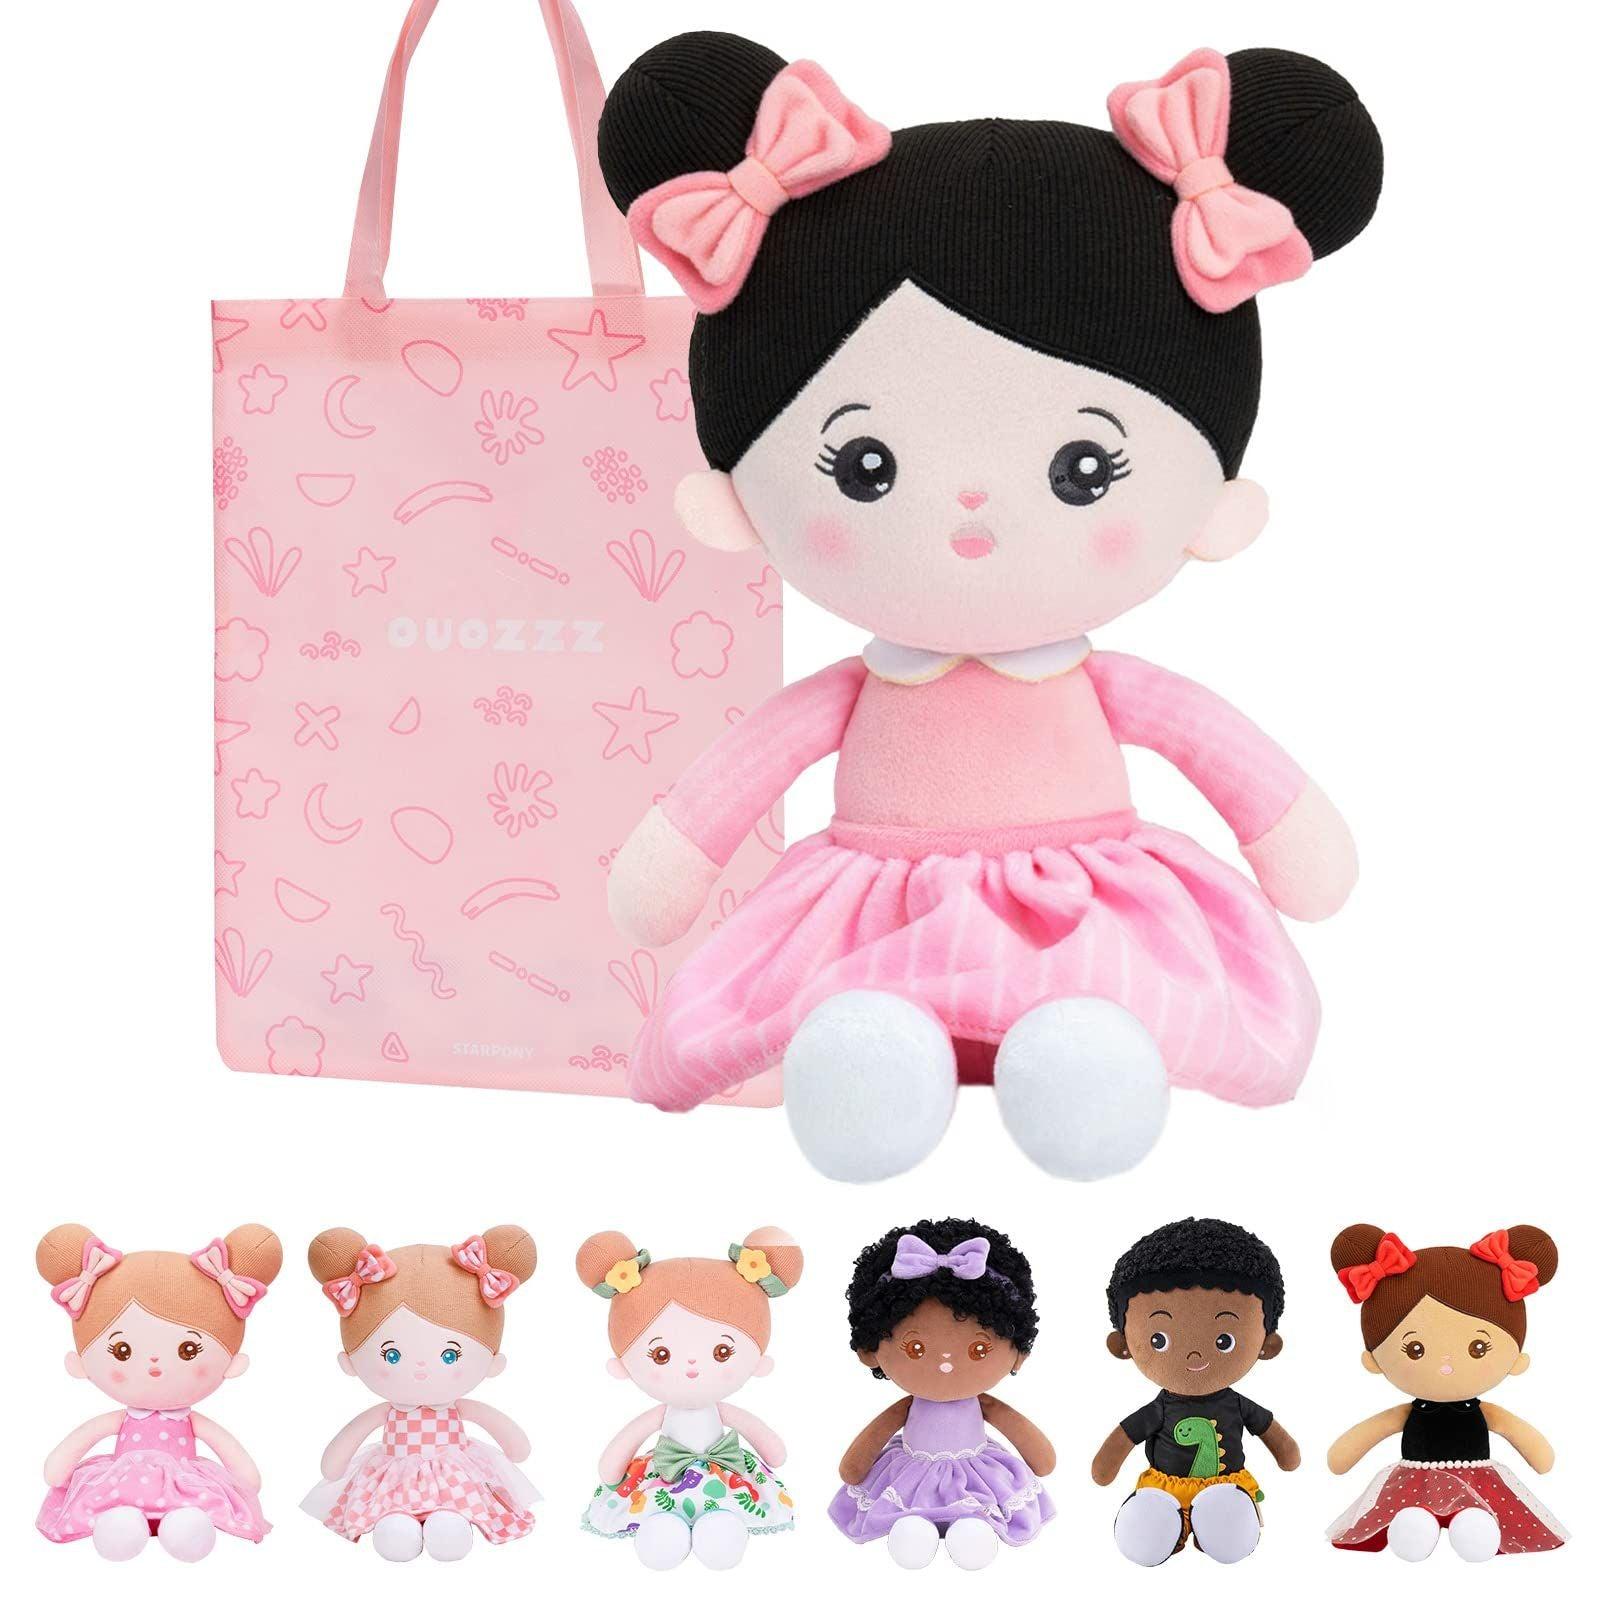 Starpony OUOZZZ 15'' Baby Dolls Girls Gifts Plush Soft Rag Toy for 1 Year Old Kids 0